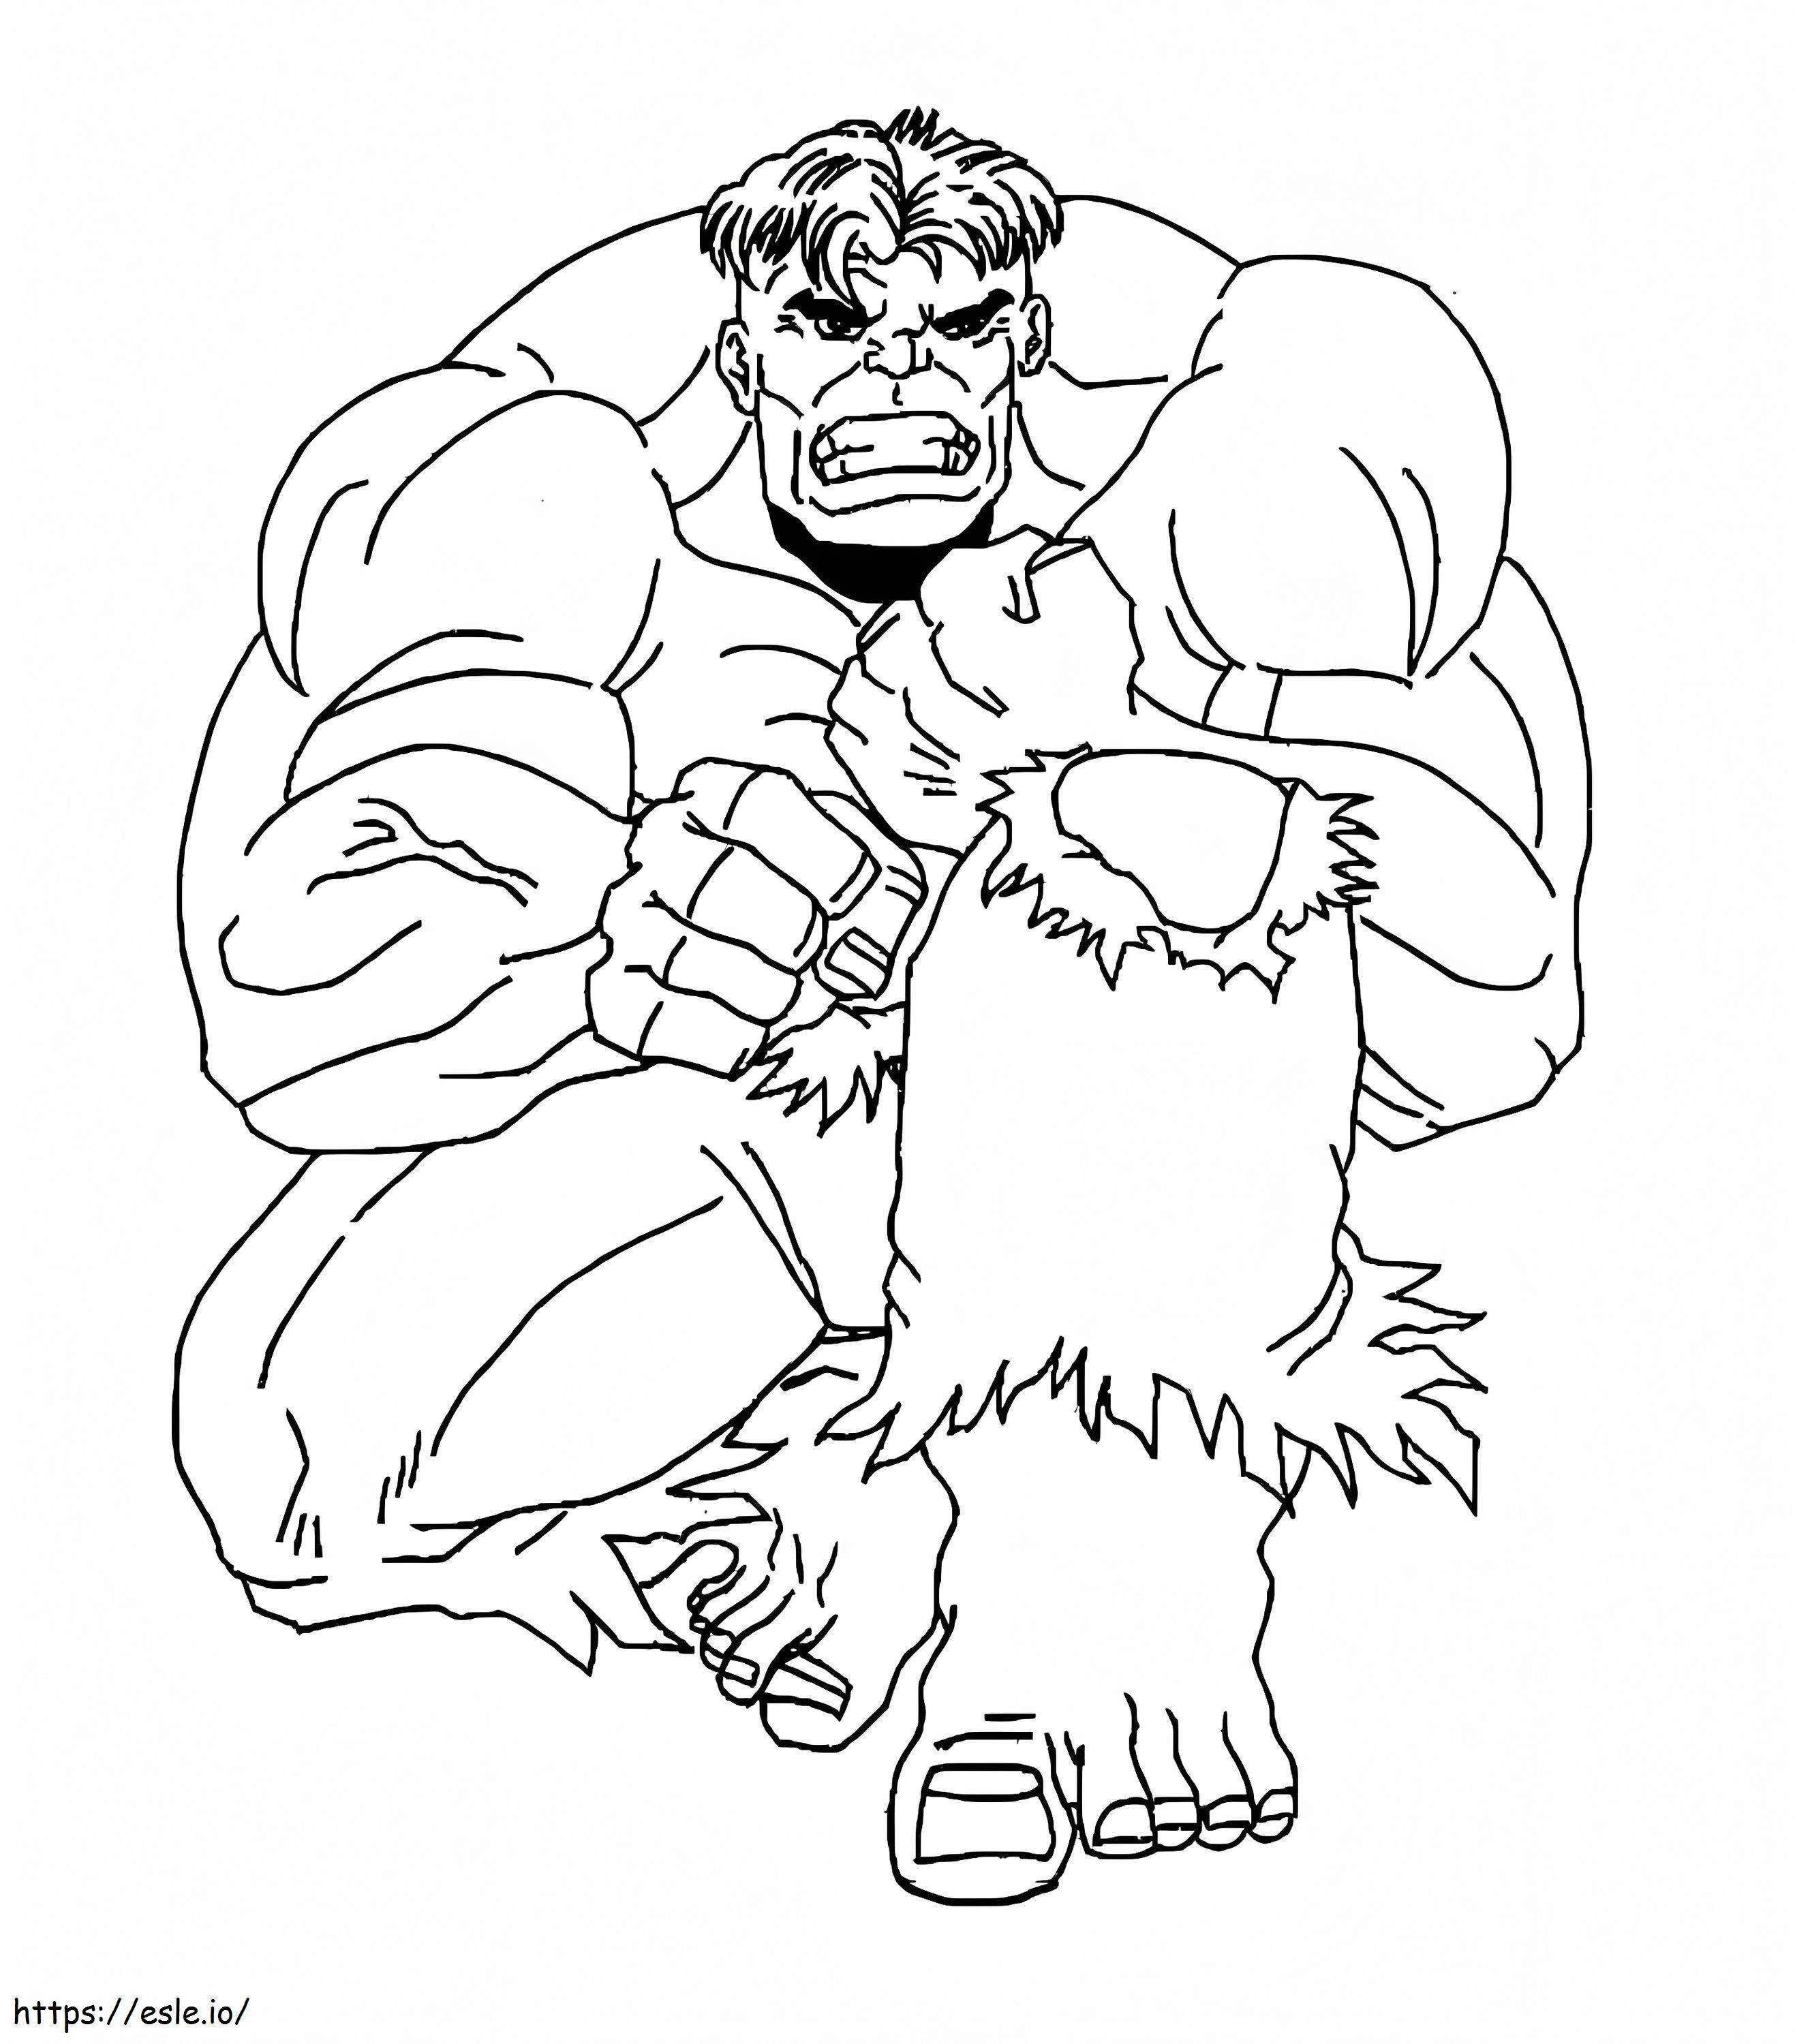 Hulk 1 coloring page